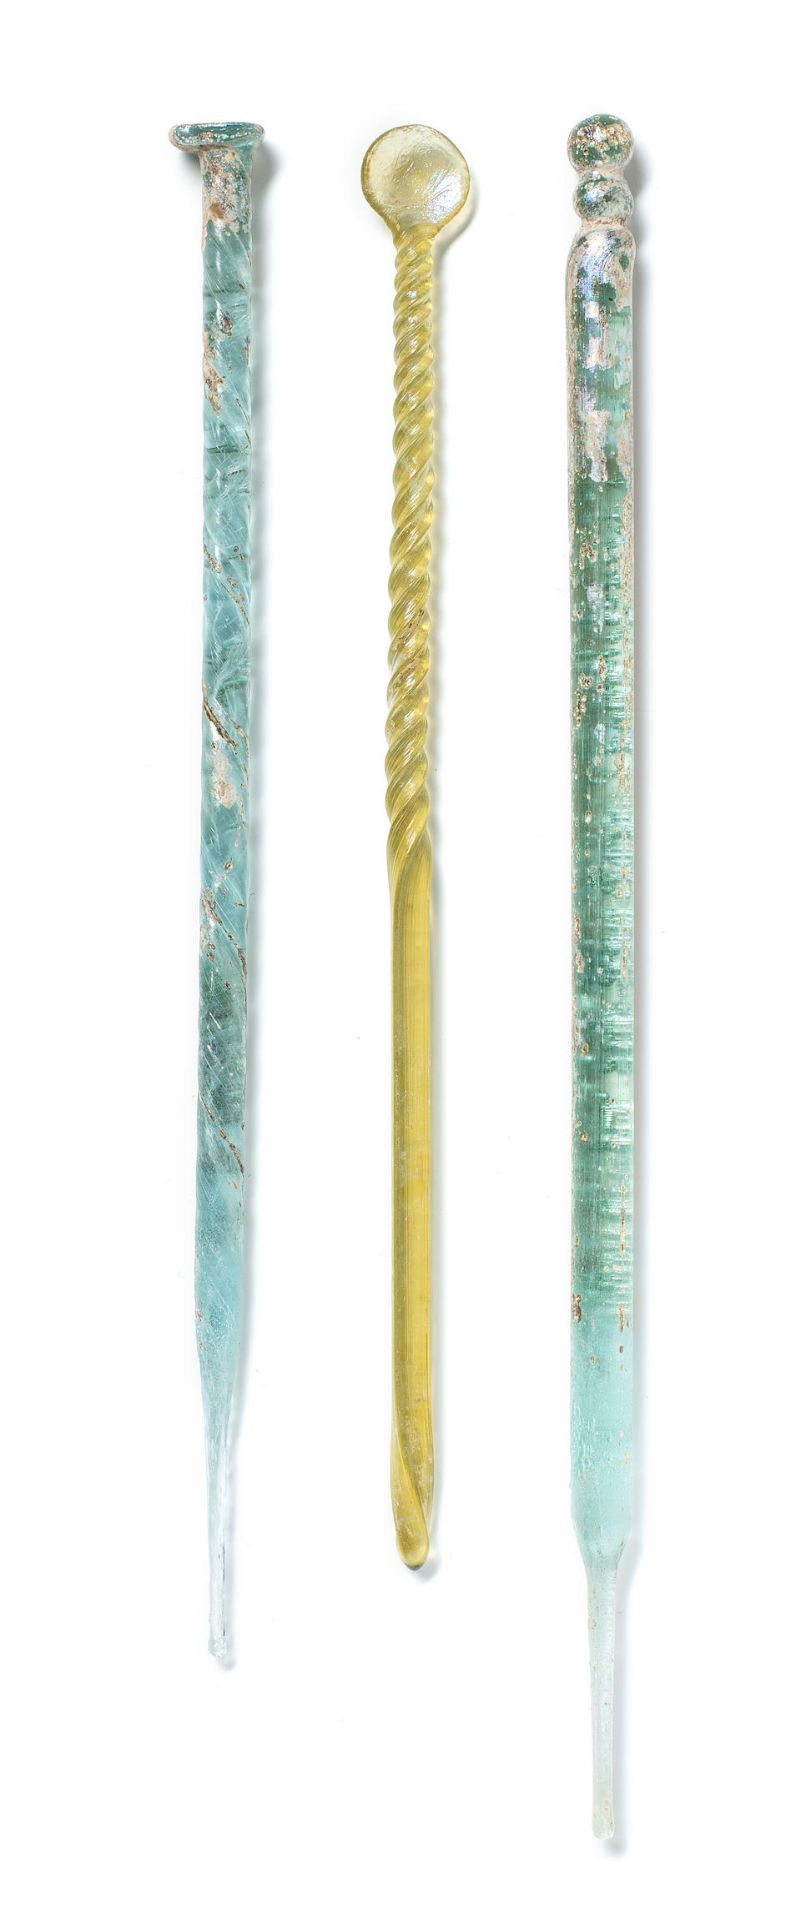 Two Roman glass pins and a Roman glass stirring rod 3